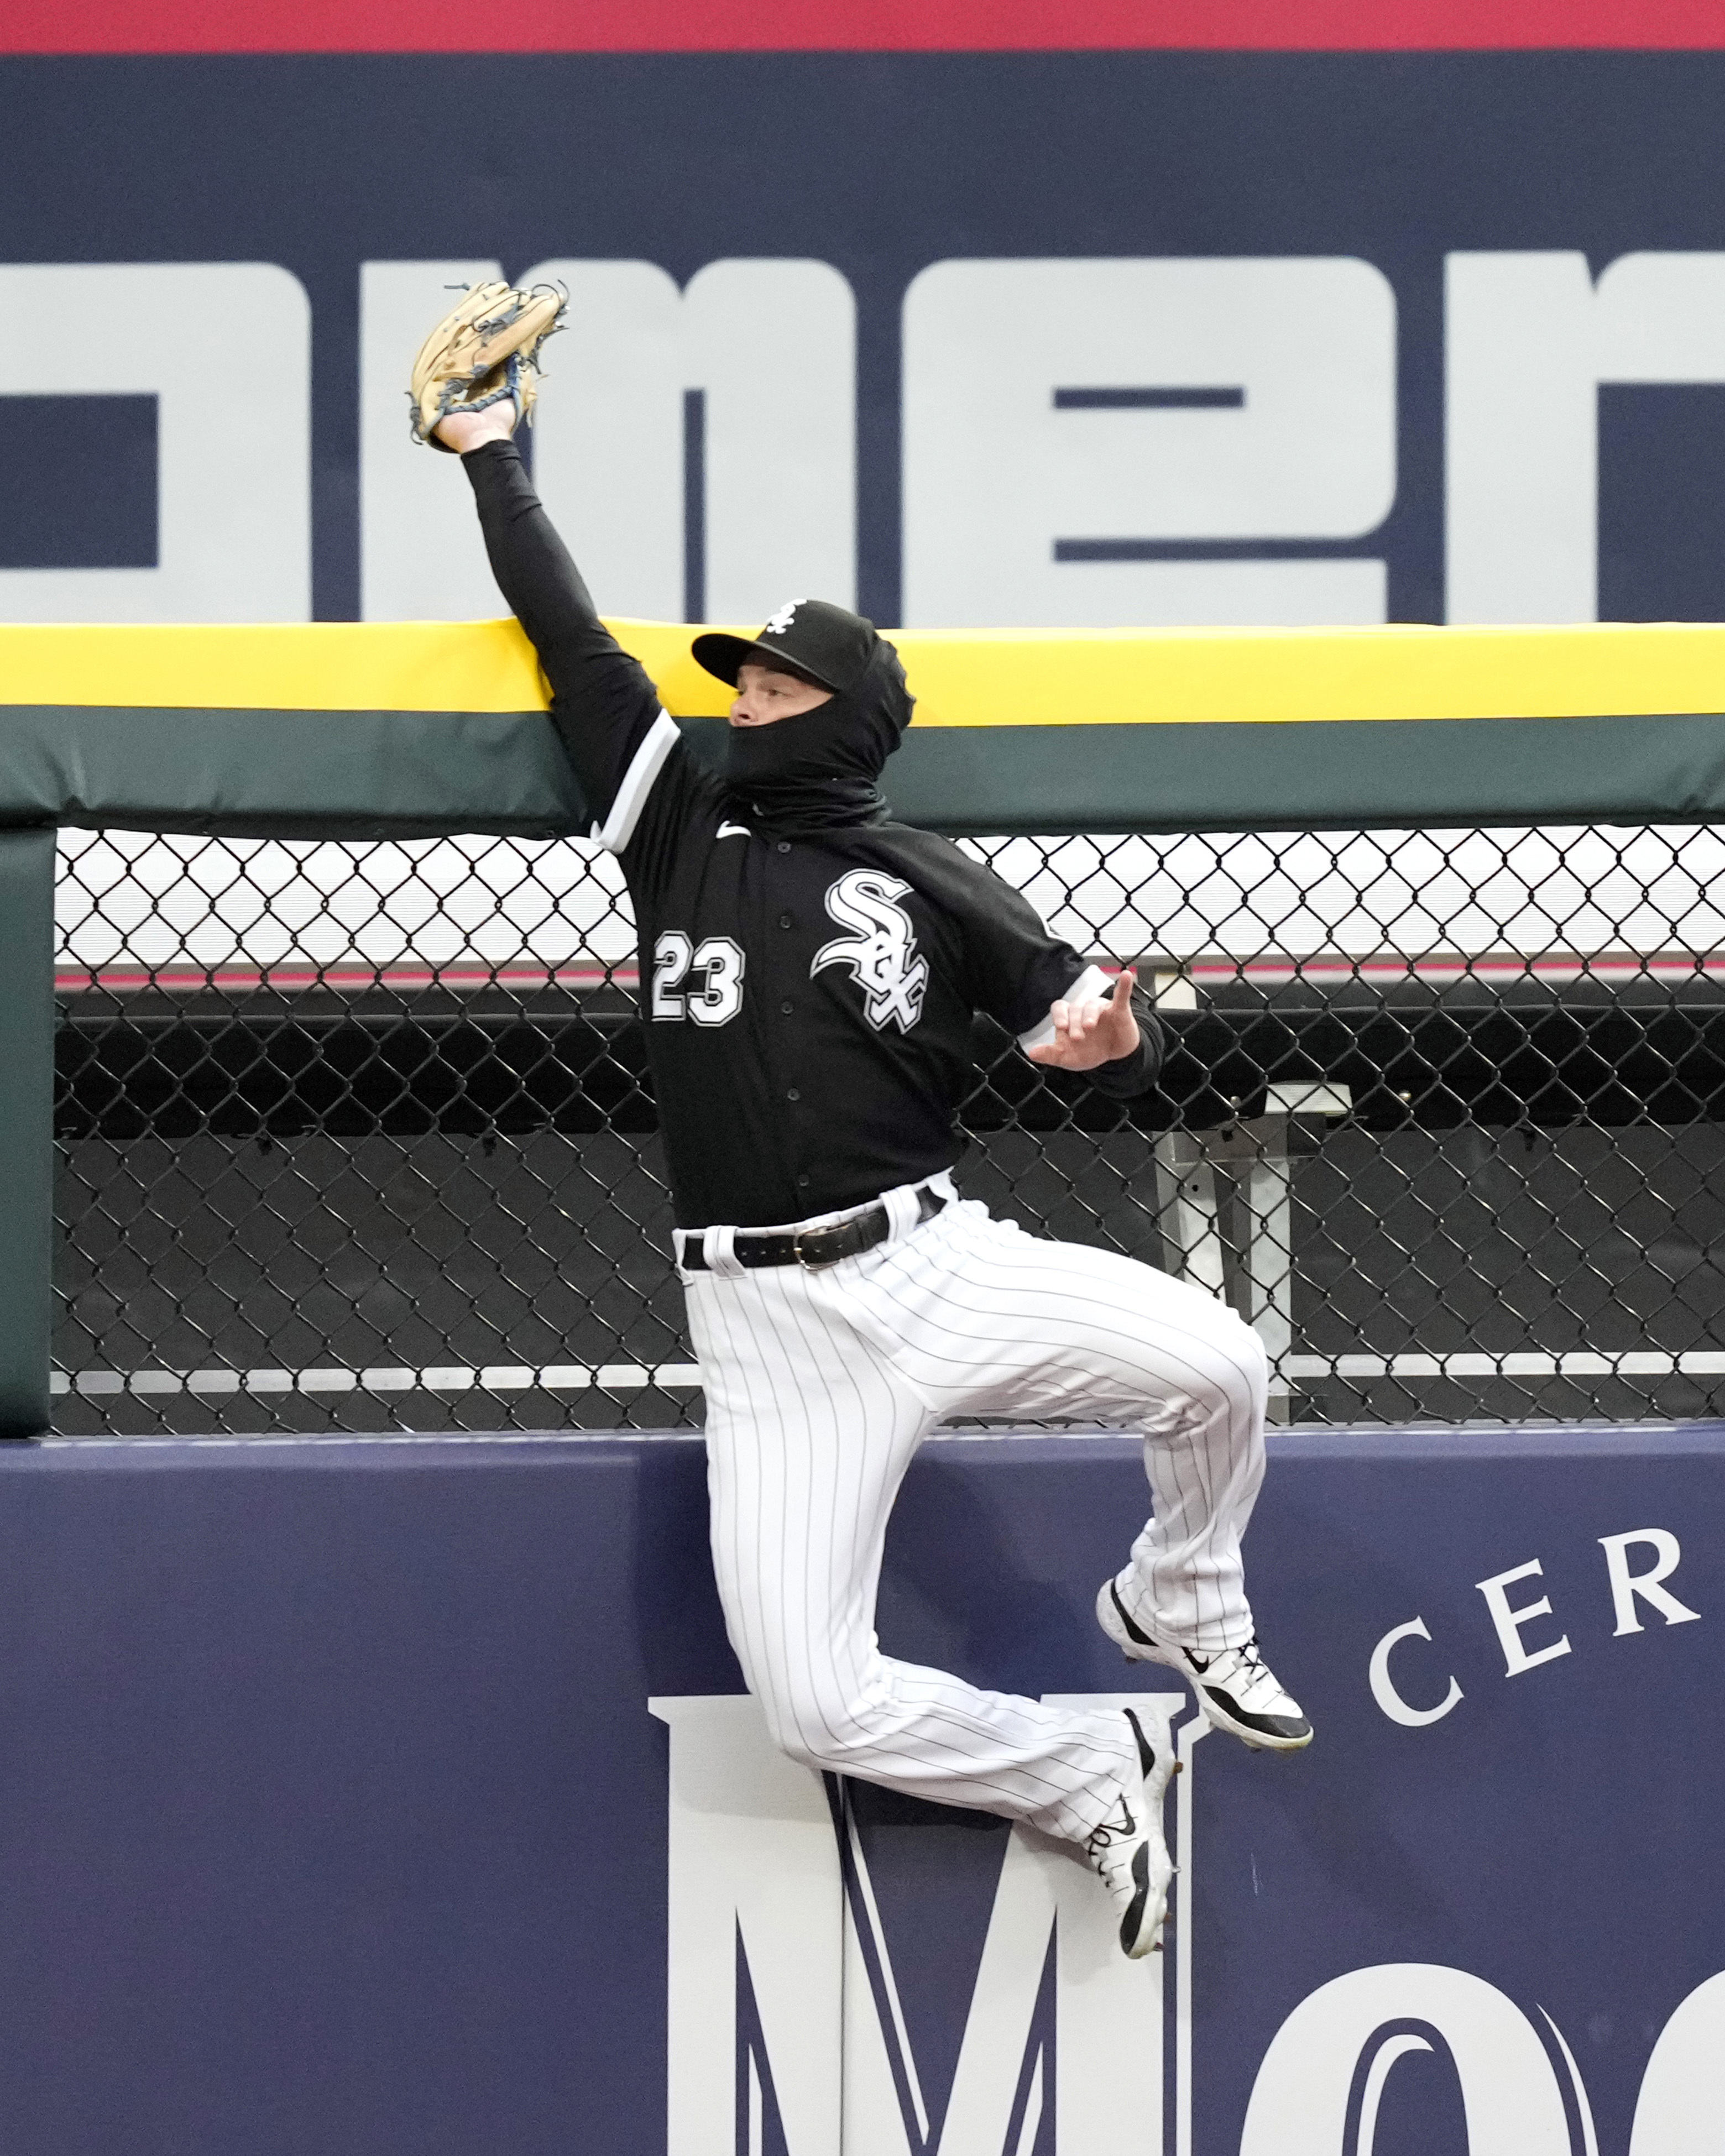 WATCH: Andrew Benintendi hits first home run in White Sox uniform